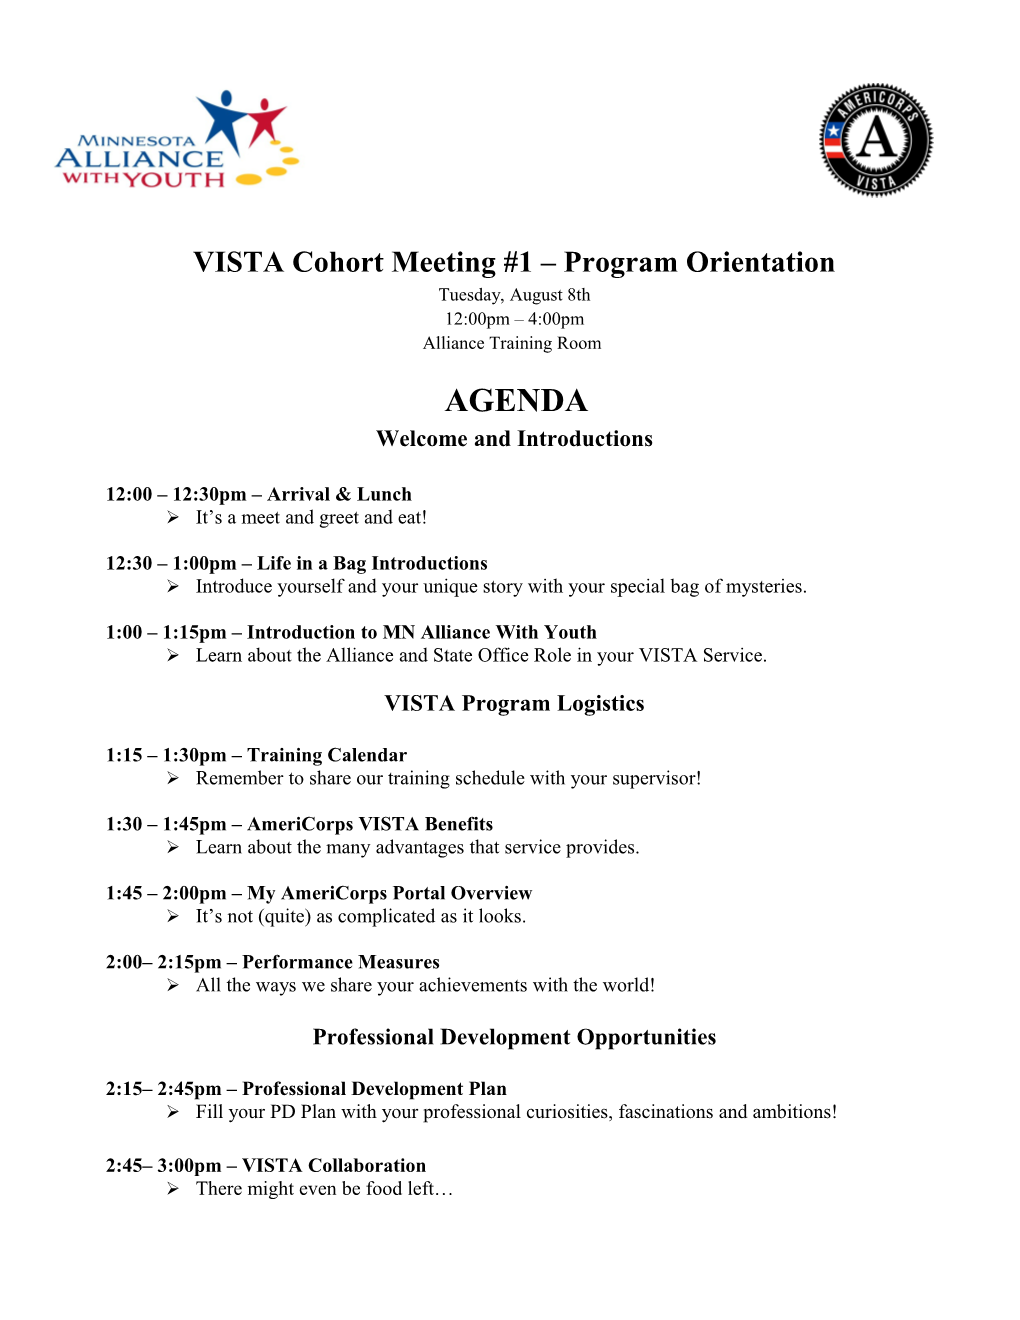 VISTA Cohort Meeting #1 Program Orientation